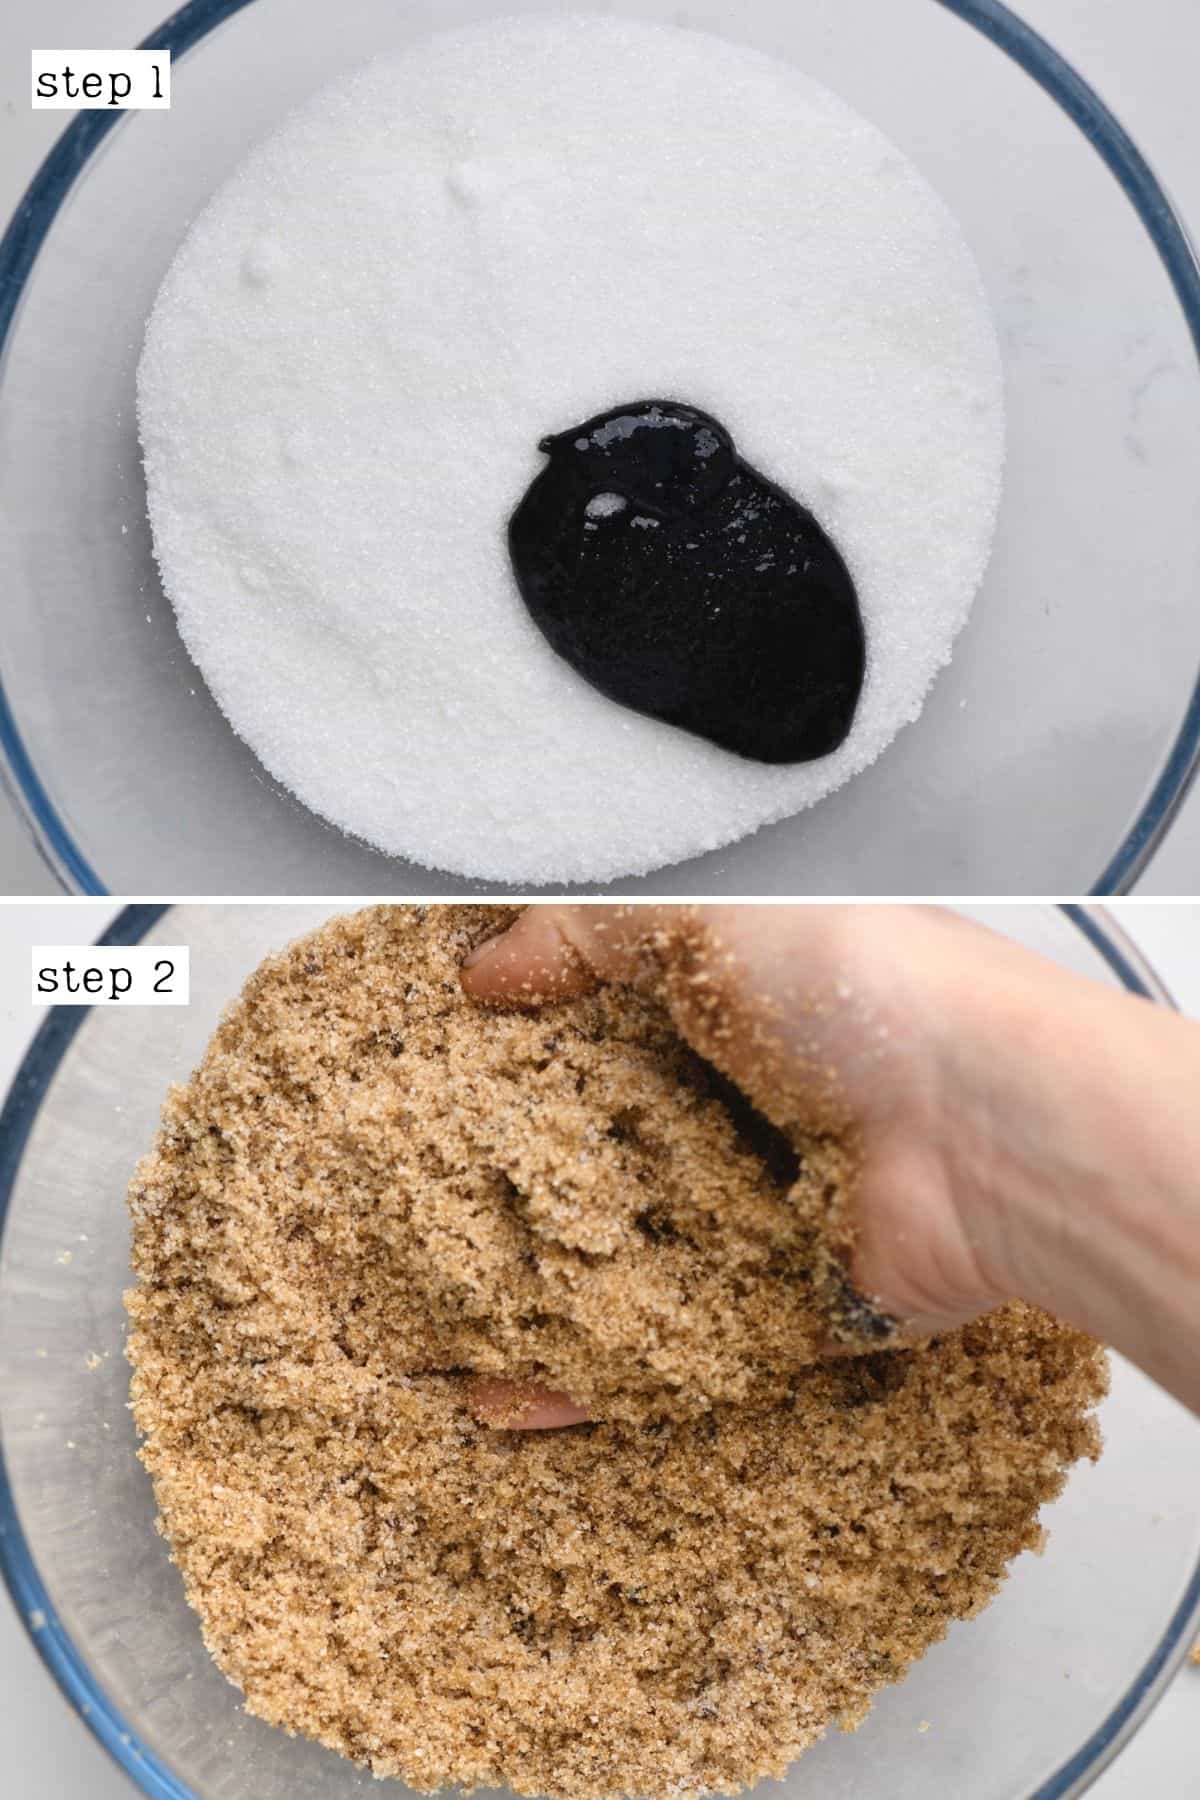 How to Make Brown Sugar - Easy DIY Brown Sugar Recipe